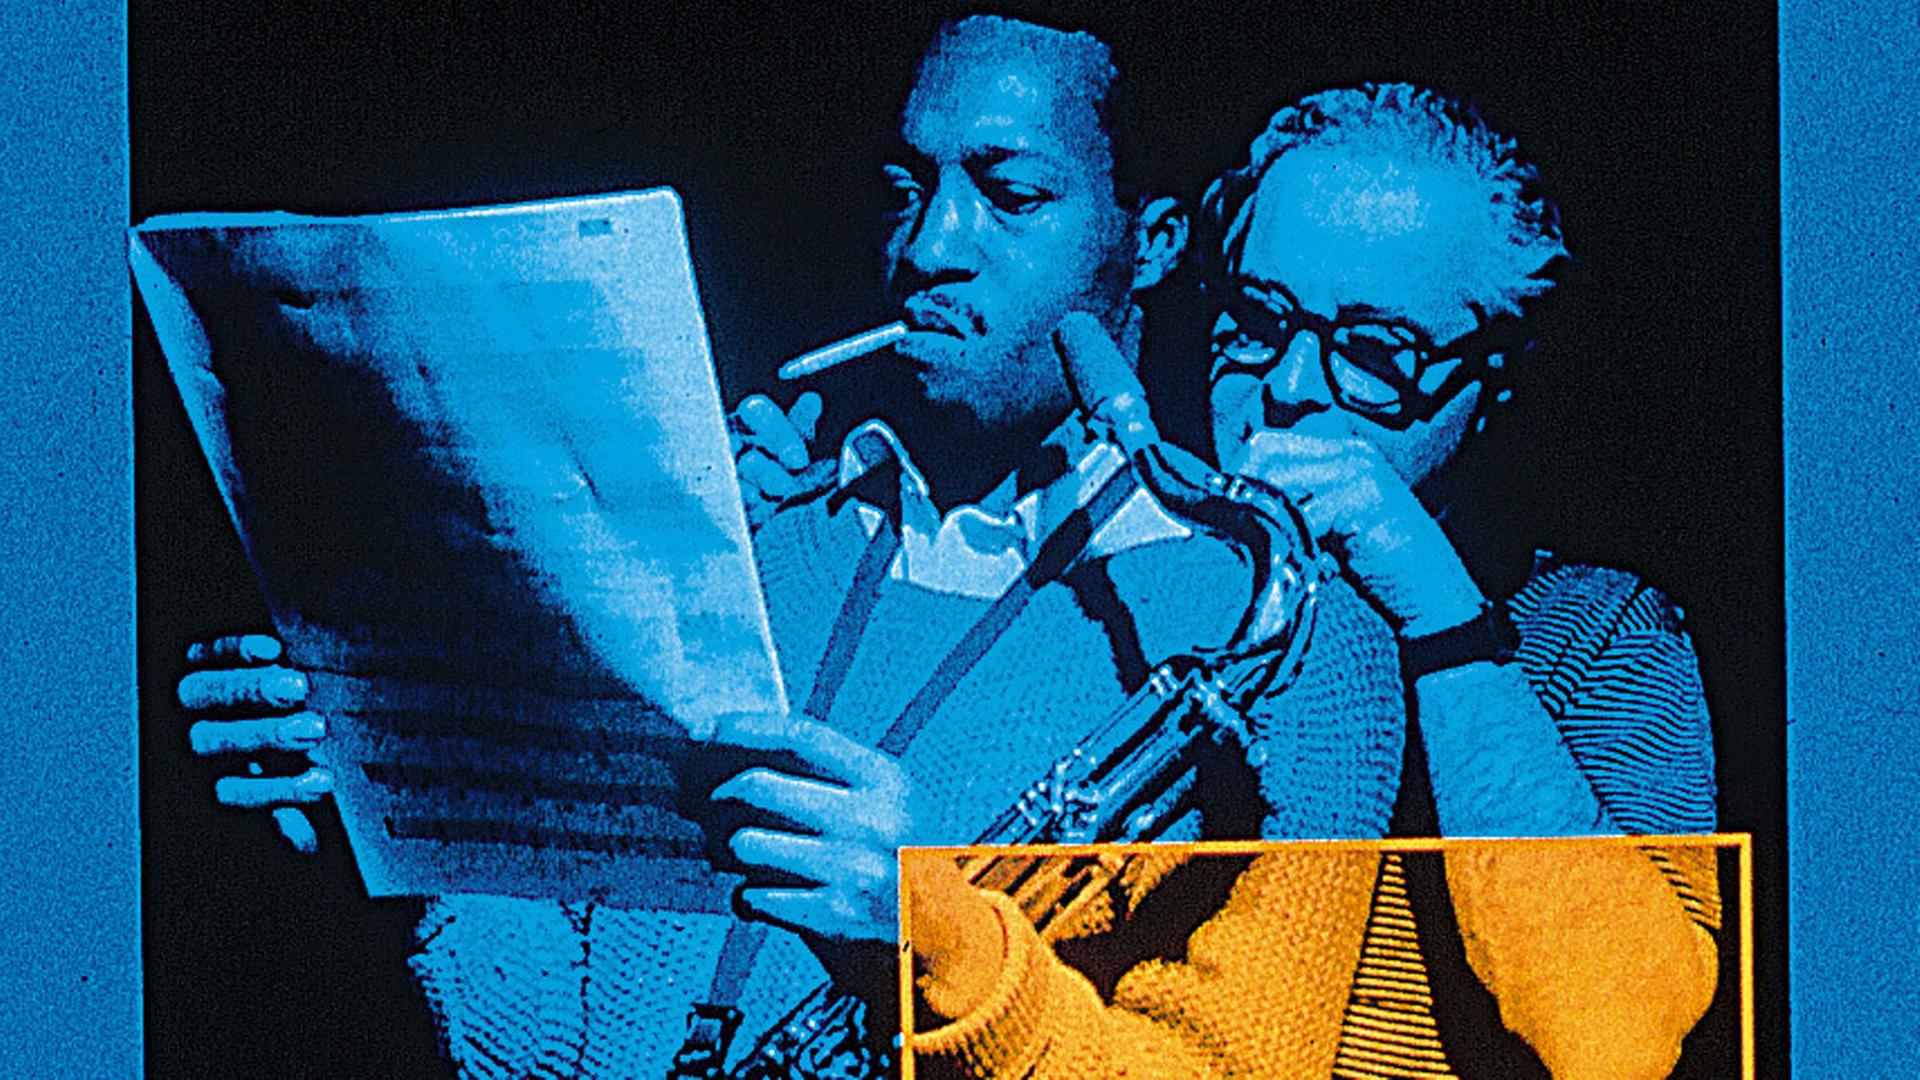 "Blue Note - A Story of Modern Jazz"